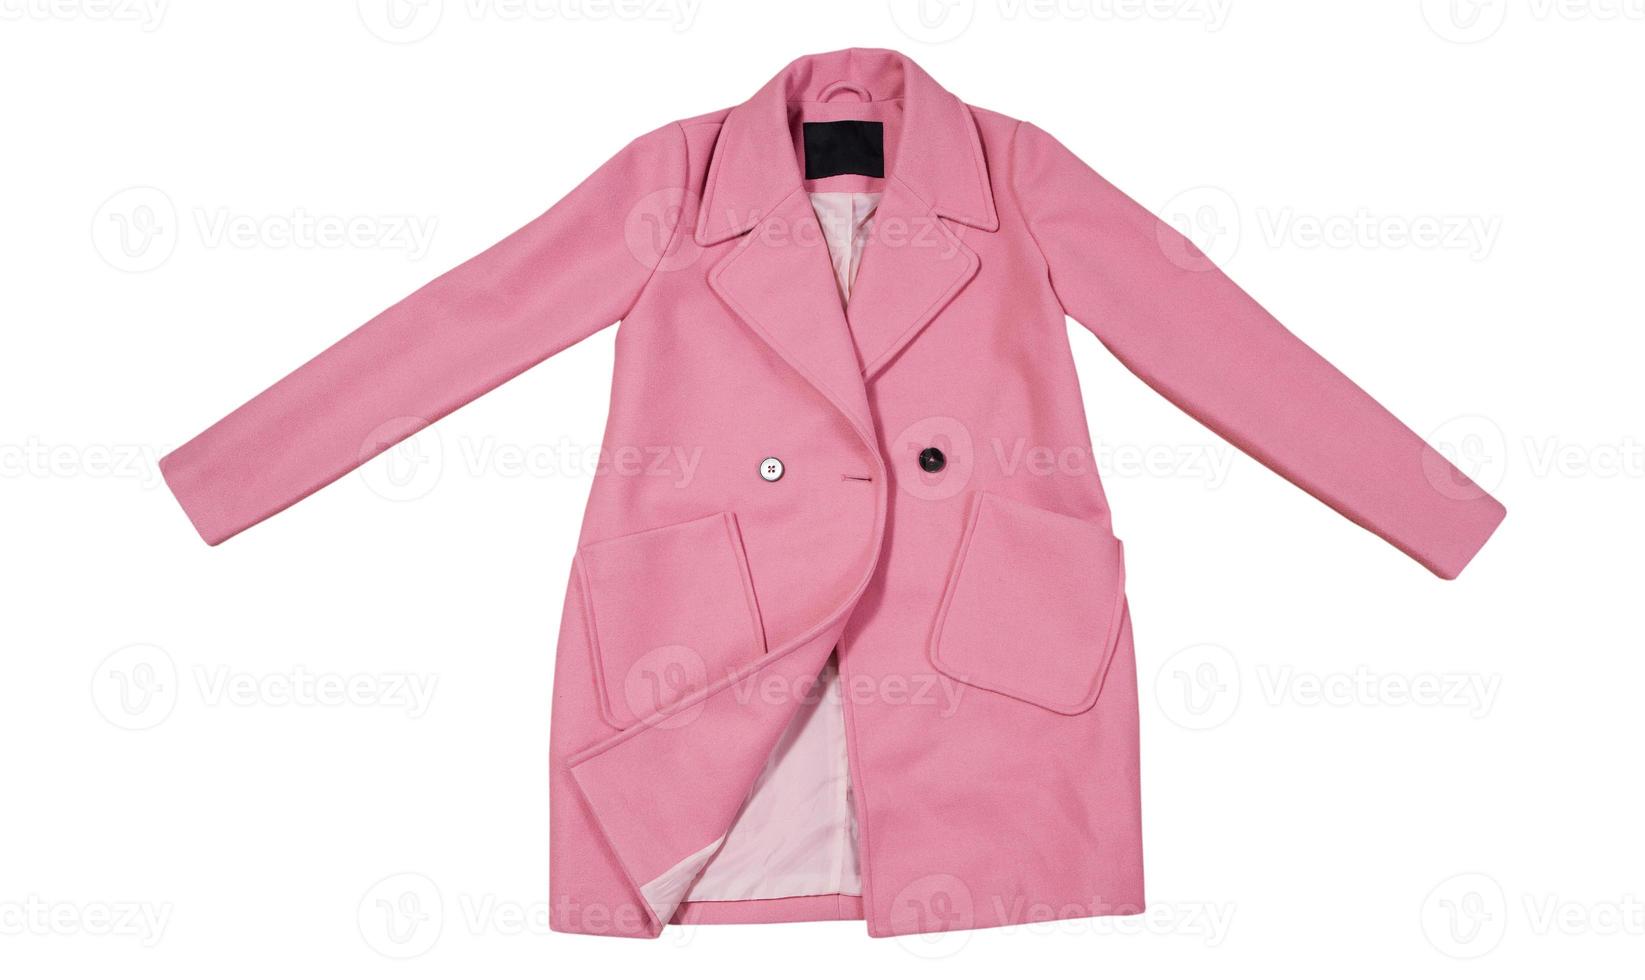 Abrigo femenino de lana rosa aislado en blanco, elegante abrigo rosa femenino sobre fondo 3815135 Foto de stock en Vecteezy